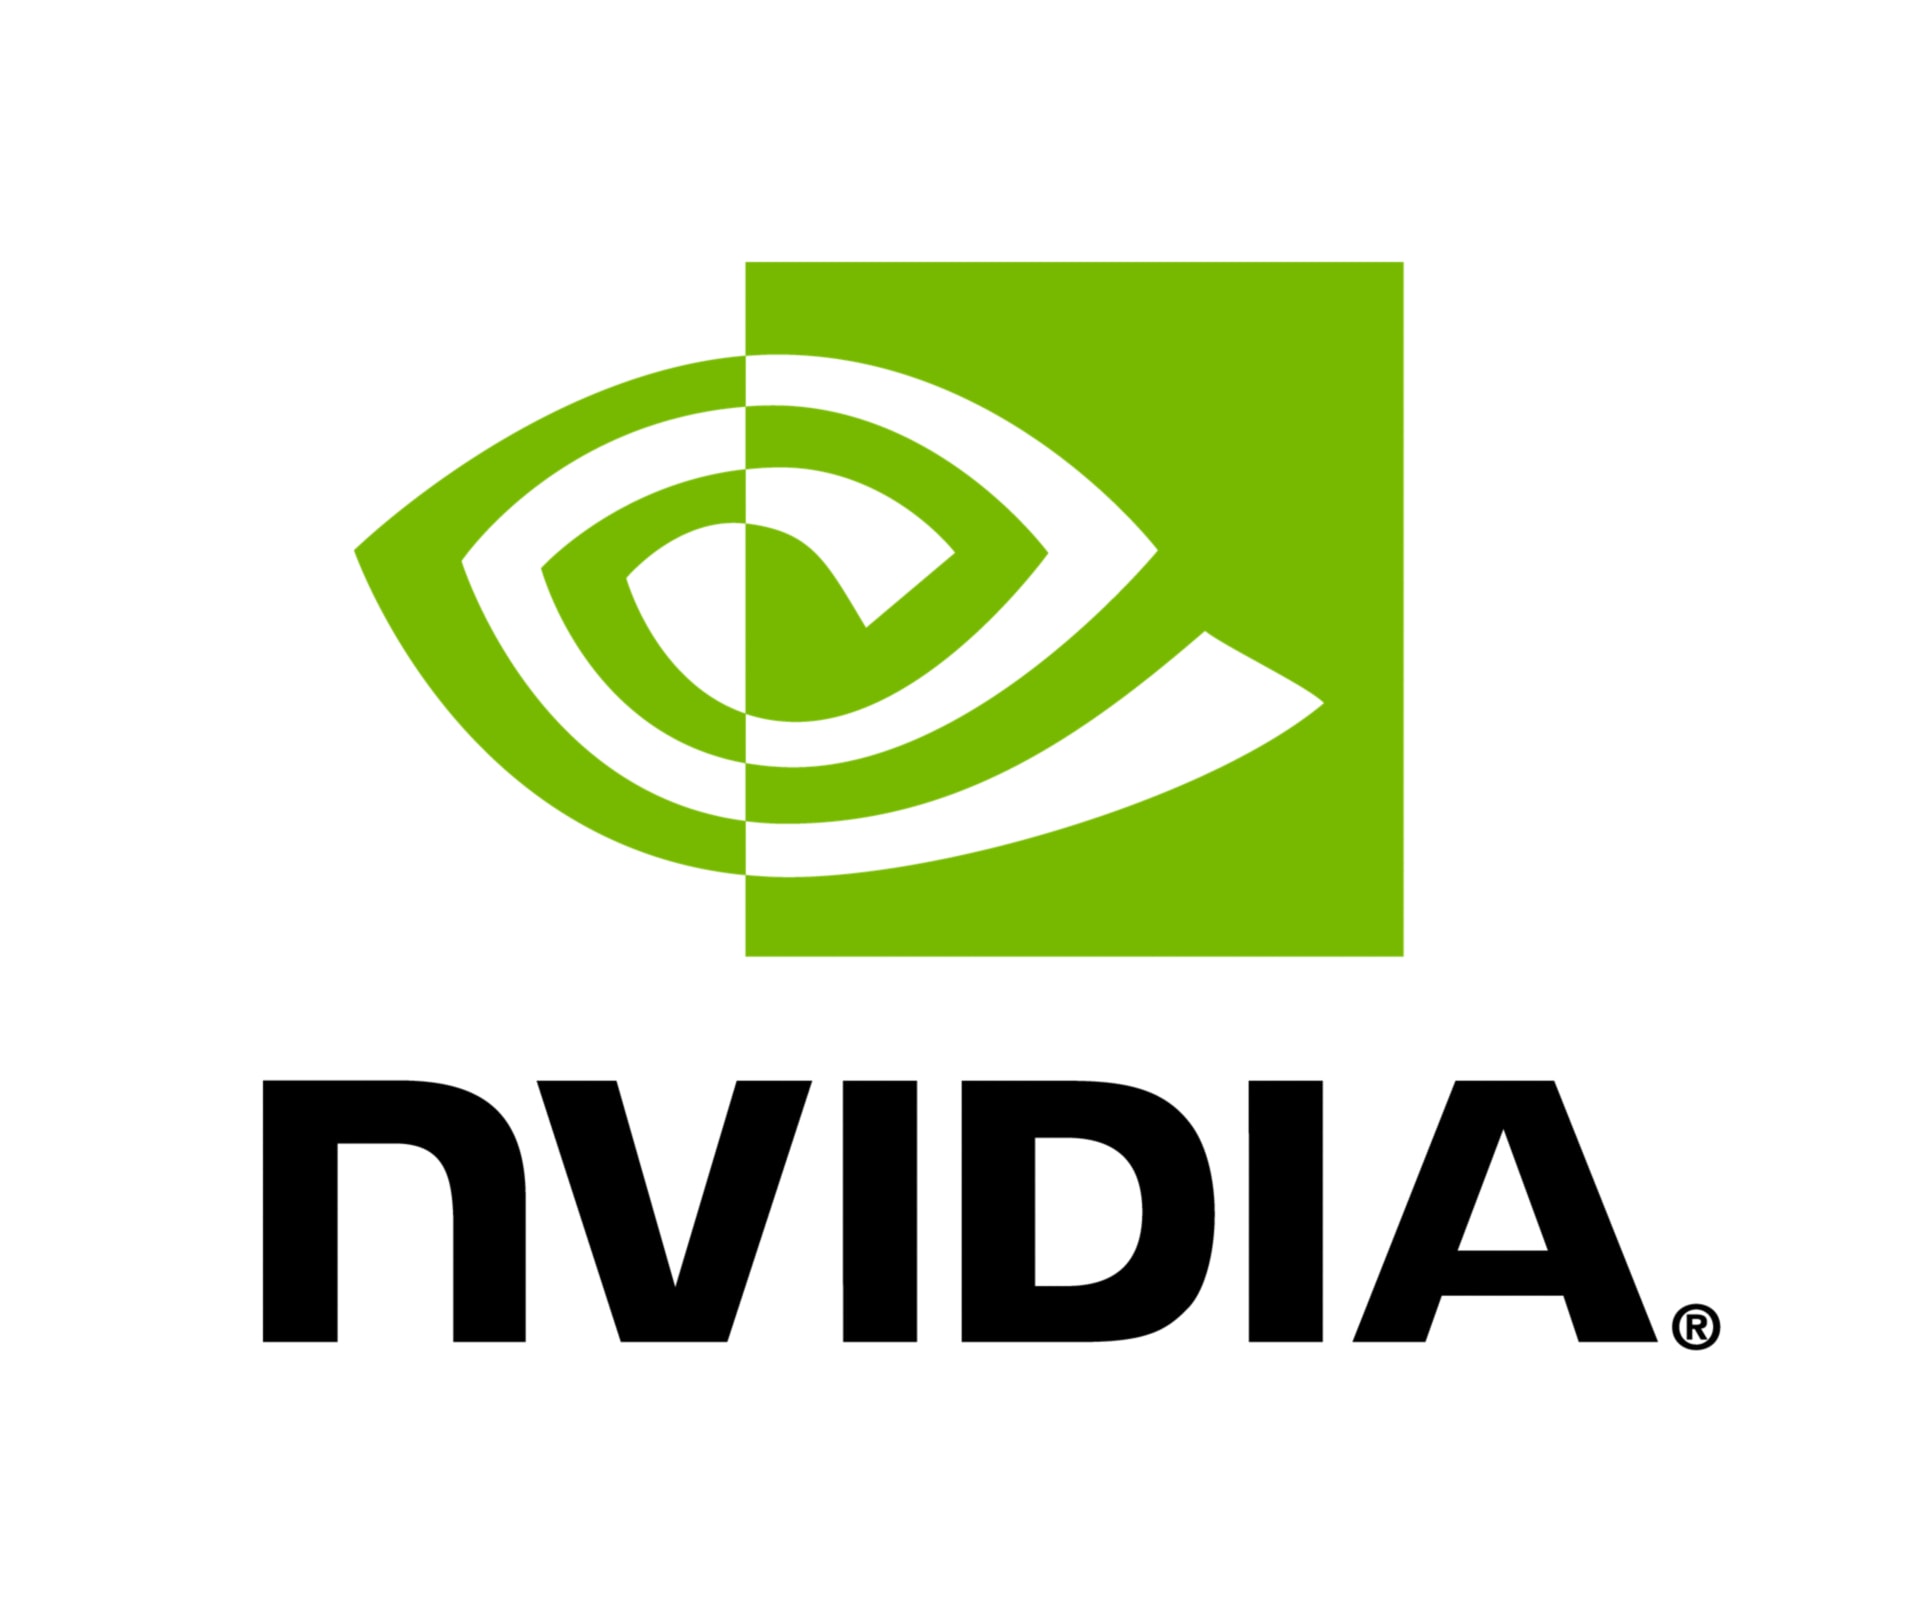 NVIDIA RTX Virtual Workstation - upgrade license - 1 concurrent user